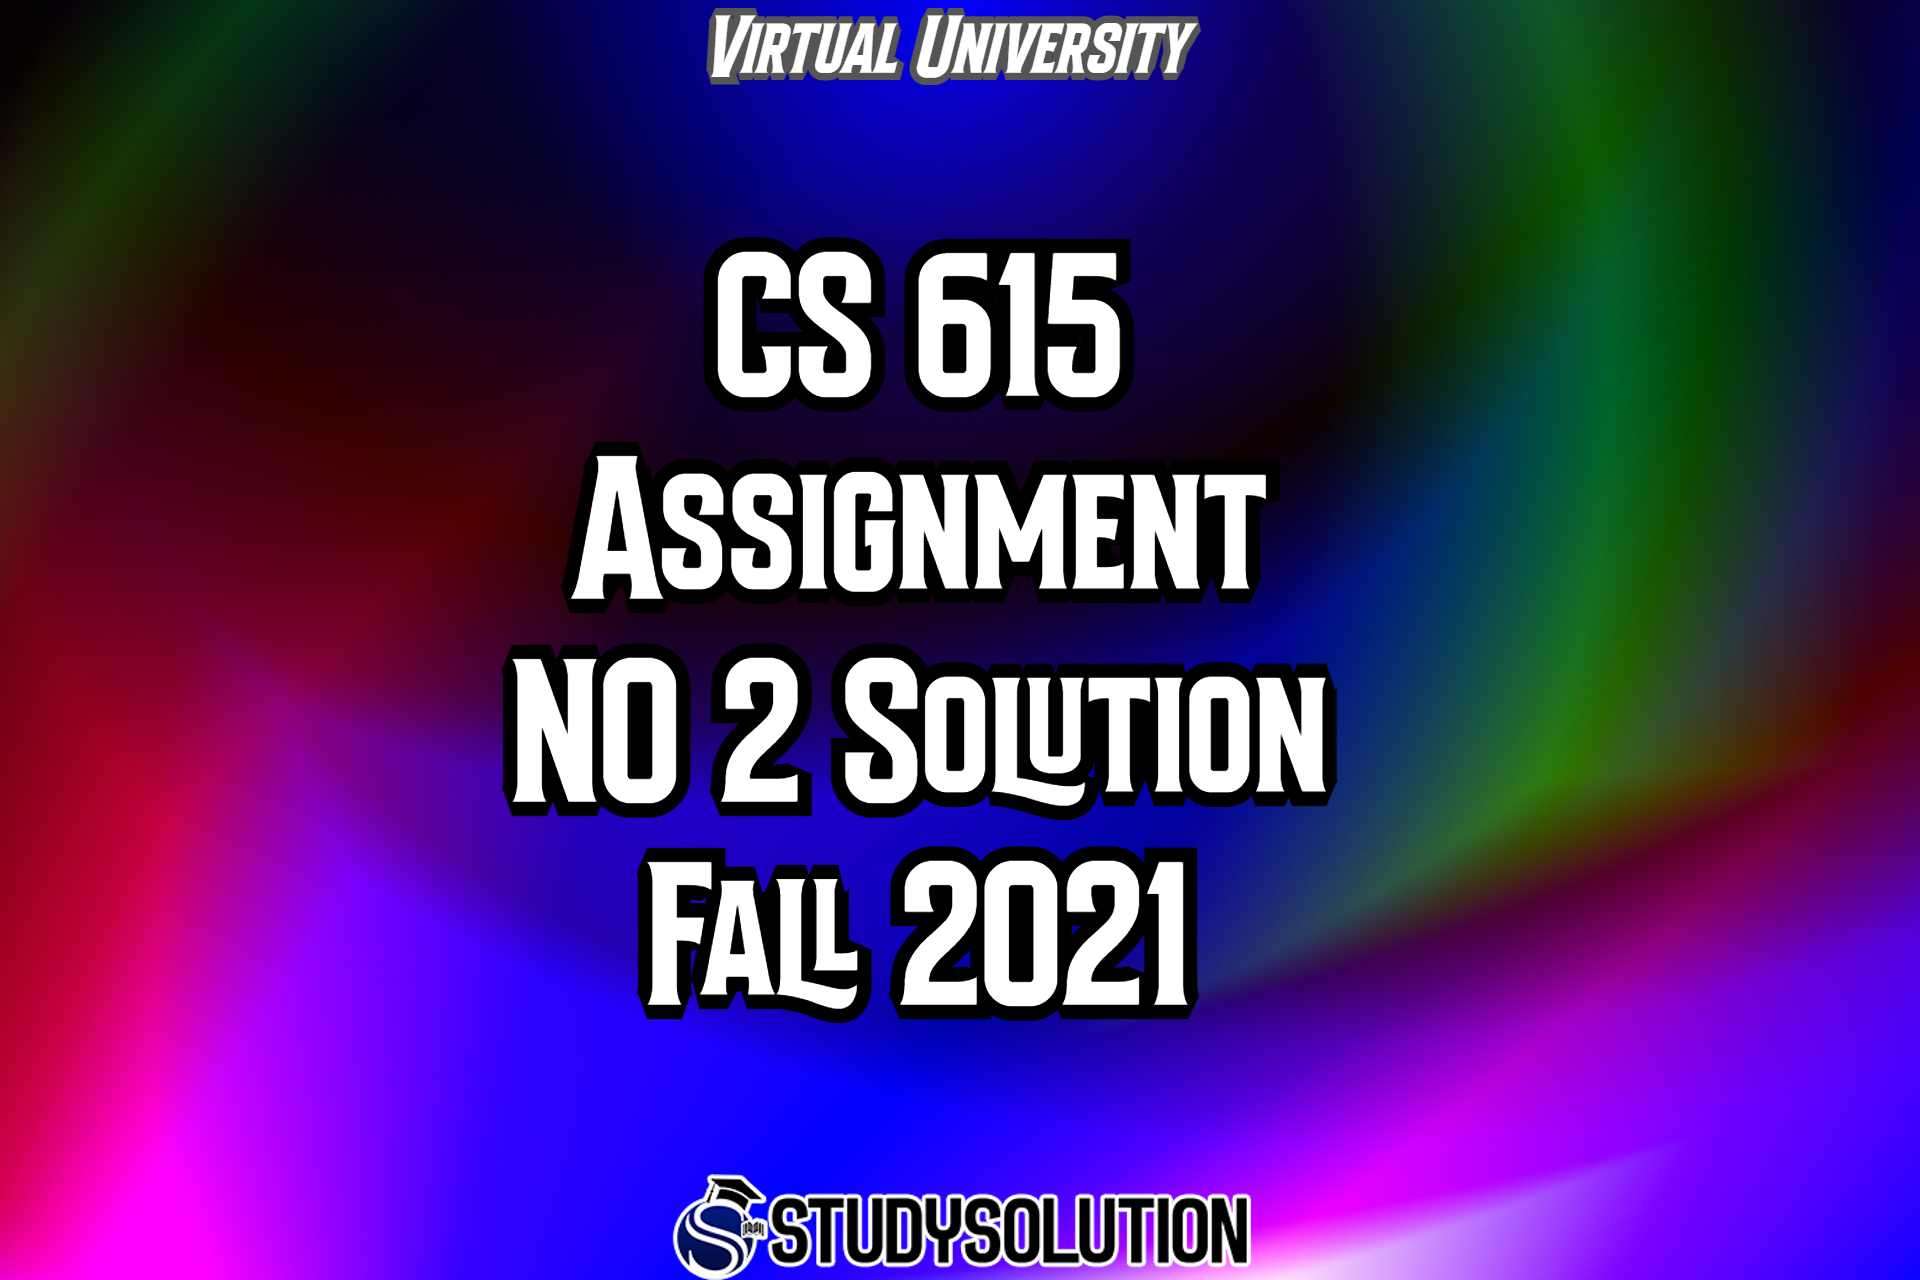 CS615 Assignment No 2 Solution Fall 2021